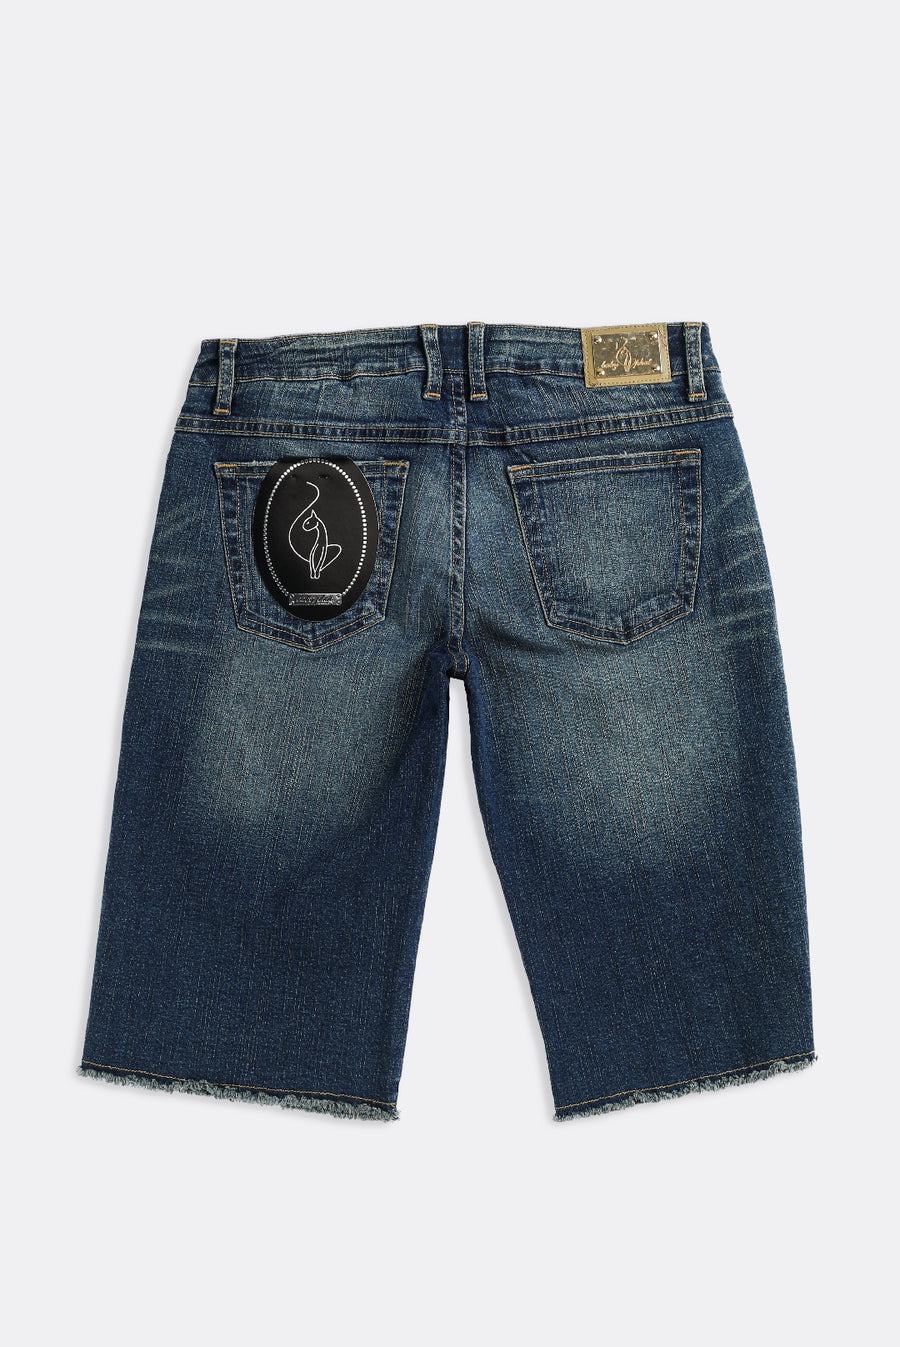 Deadstock Baby Phat Dark Wash Bedazzled Denim Shorts - W30, W32